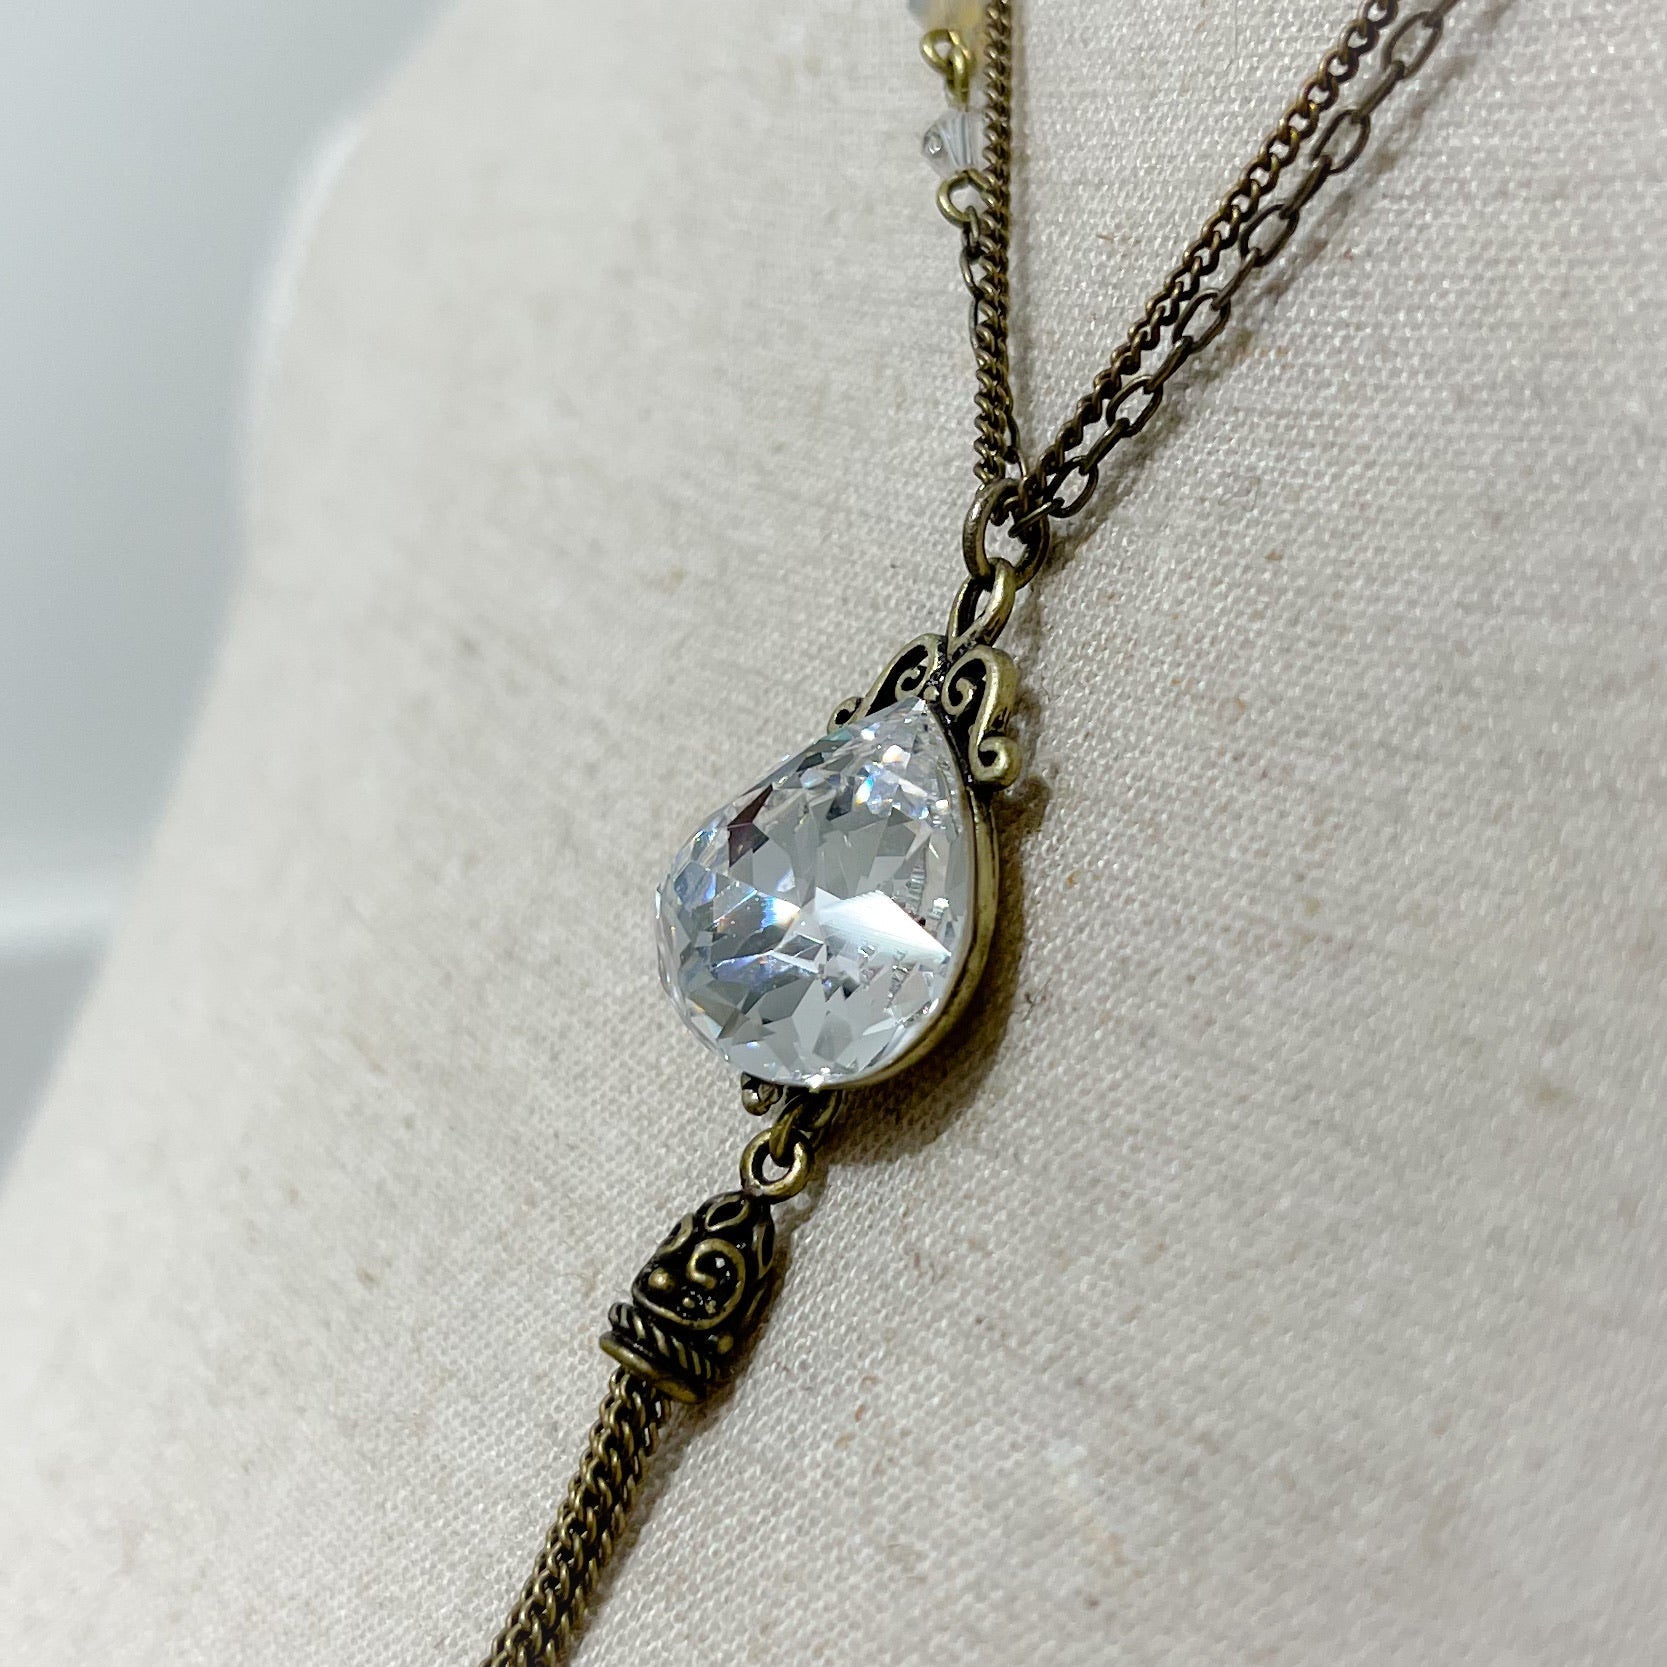 Swarovski Crystal Necklace - The Nancy Smillie Shop - Art, Jewellery & Designer Gifts Glasgow